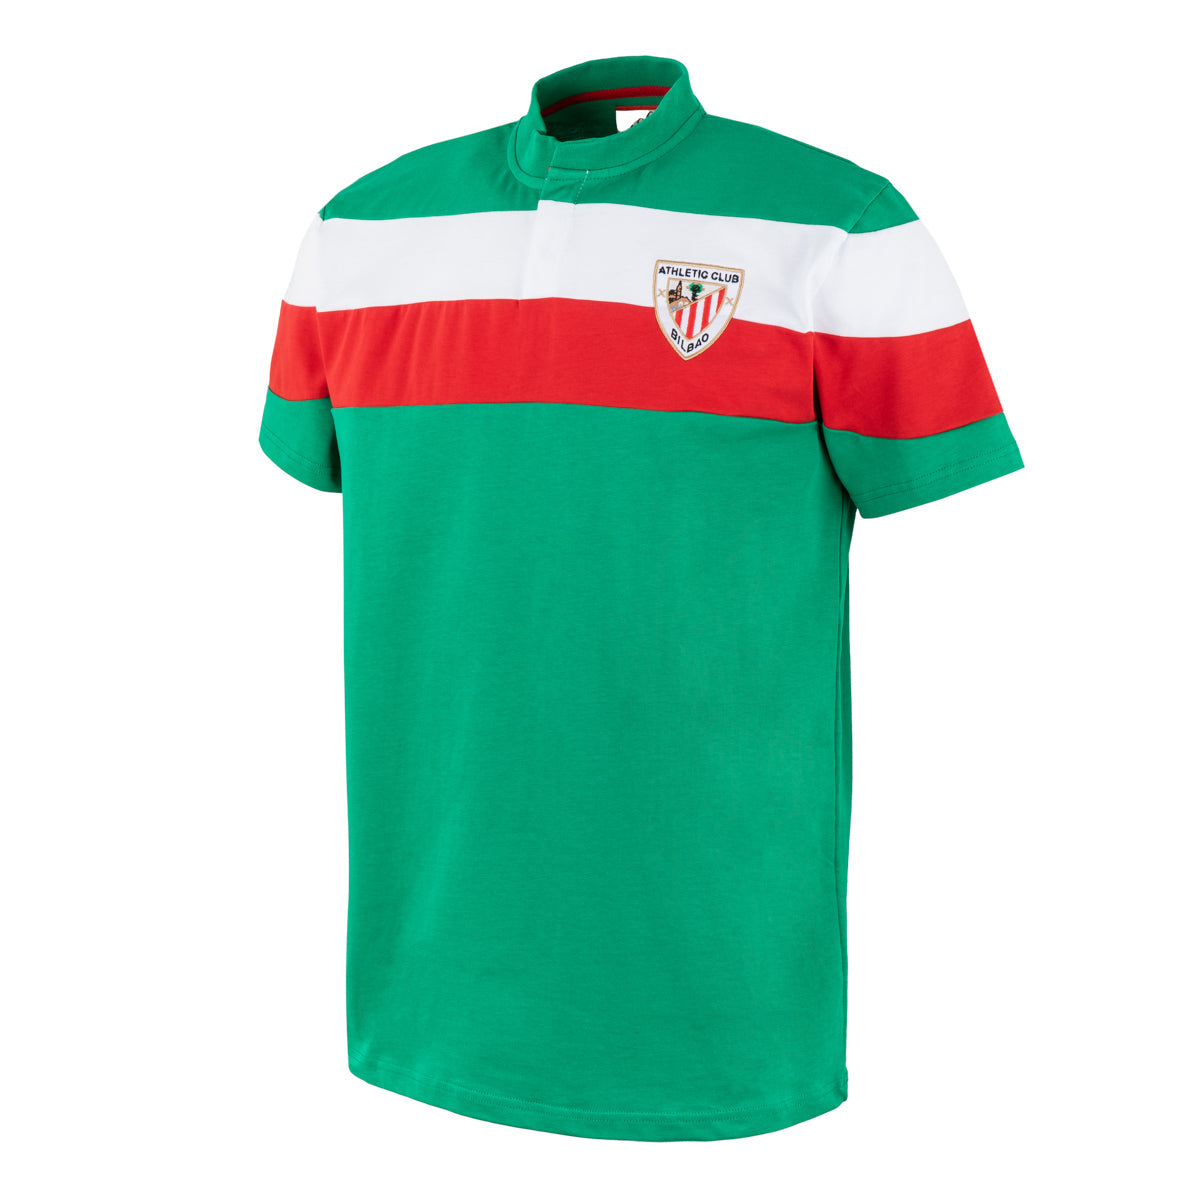 Camiseta Retro Manchester (SS) JR - Rojo blanco verde